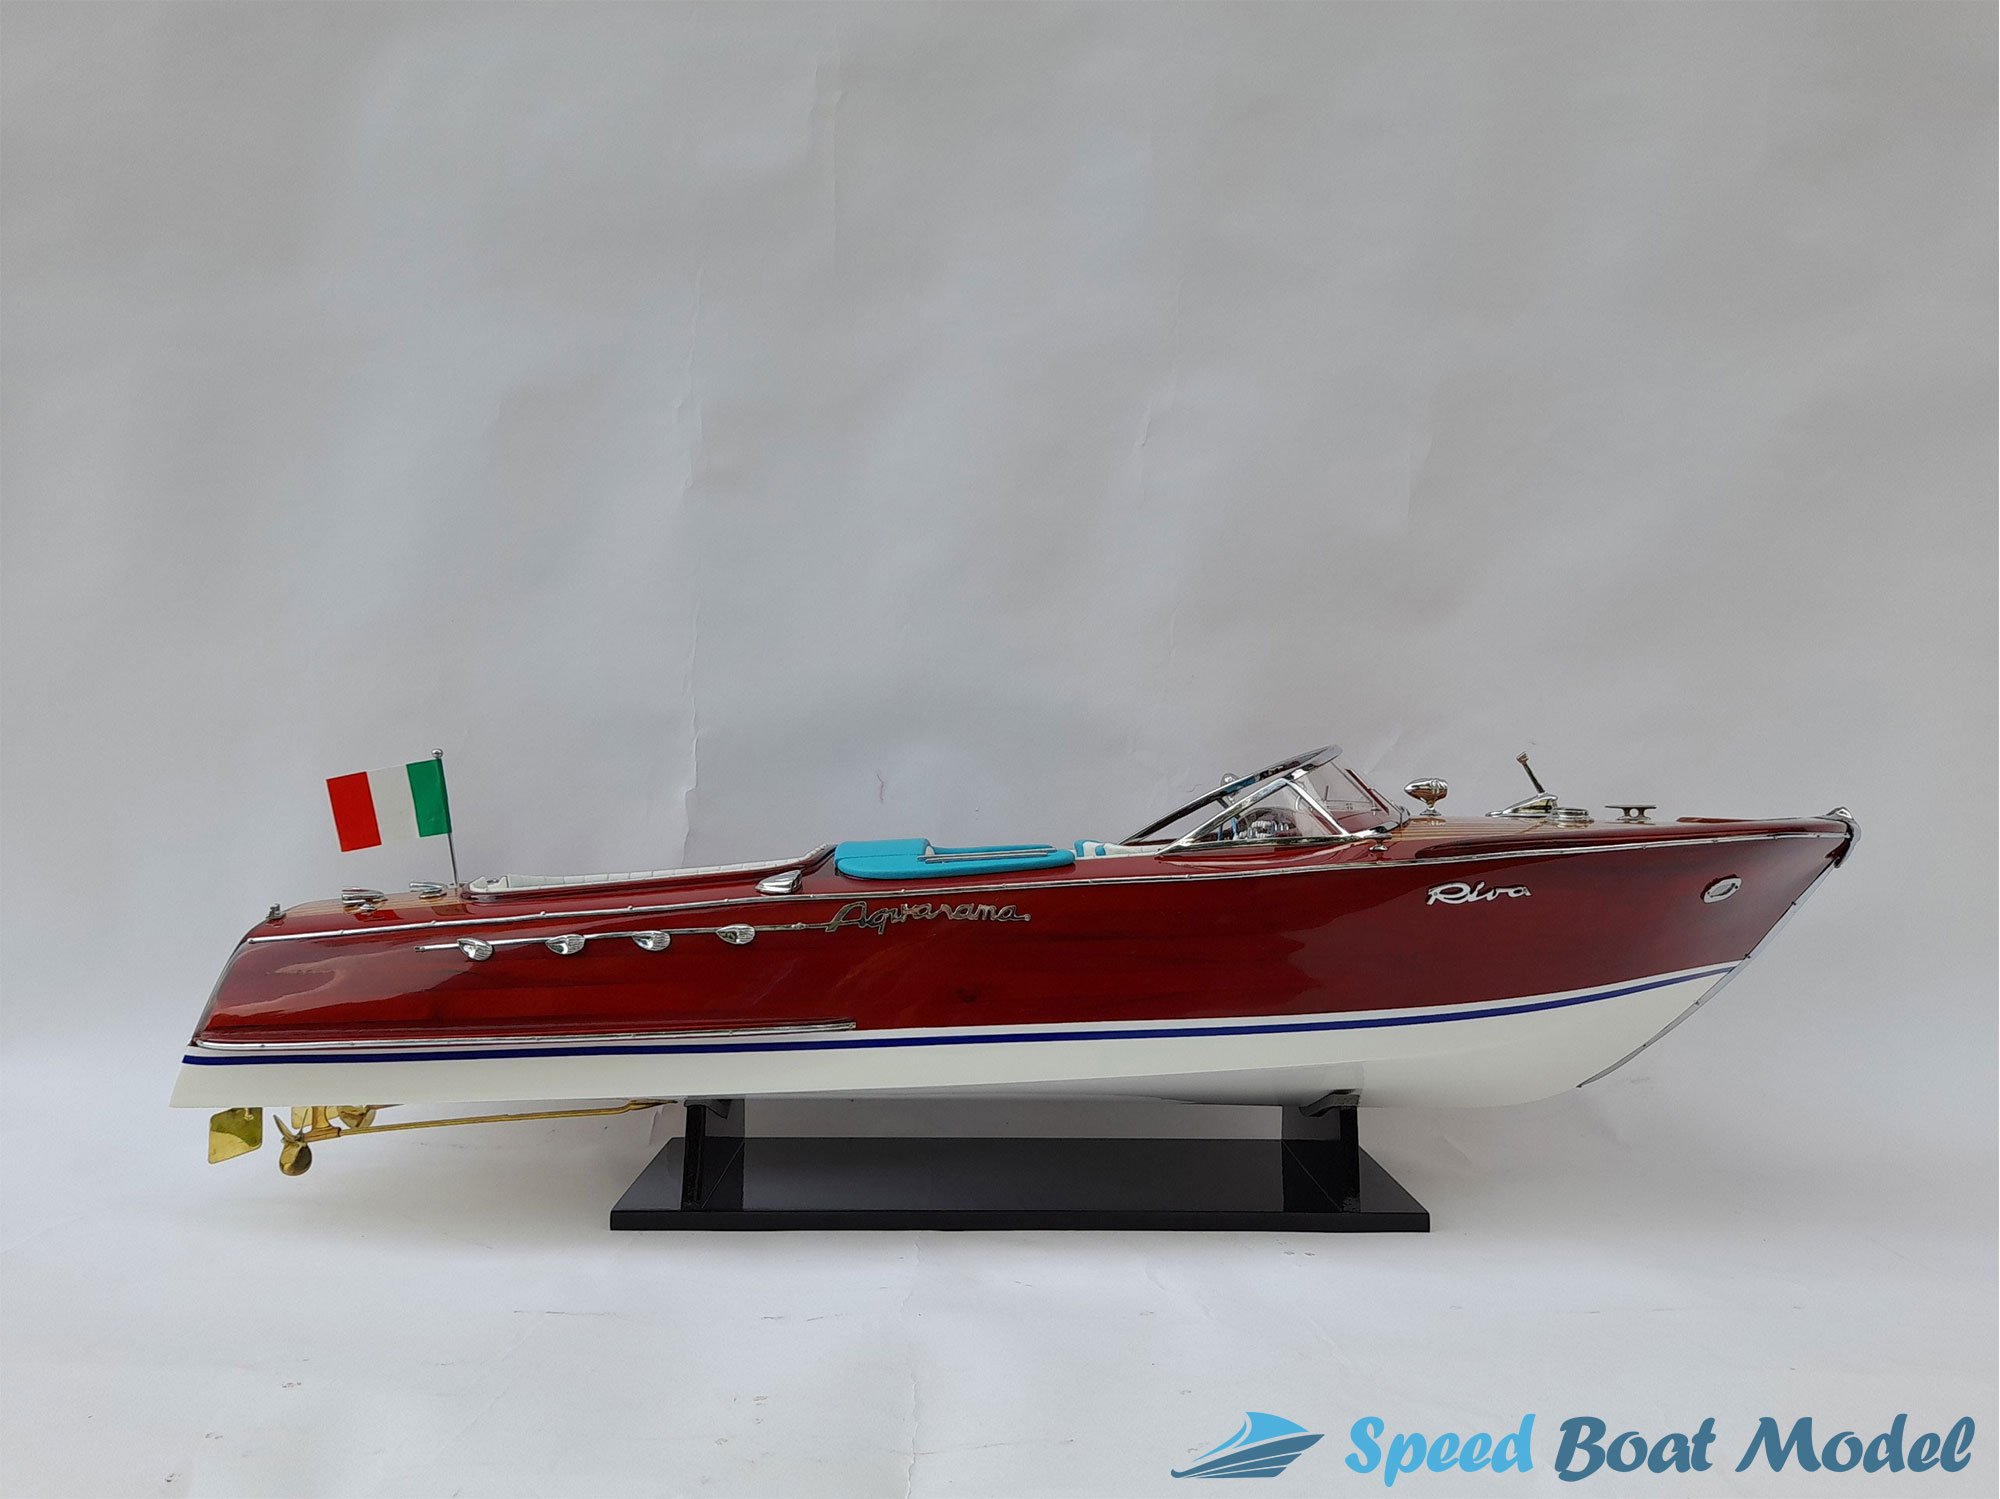 Super Riva Aquarama Classic Boat Model 34.2